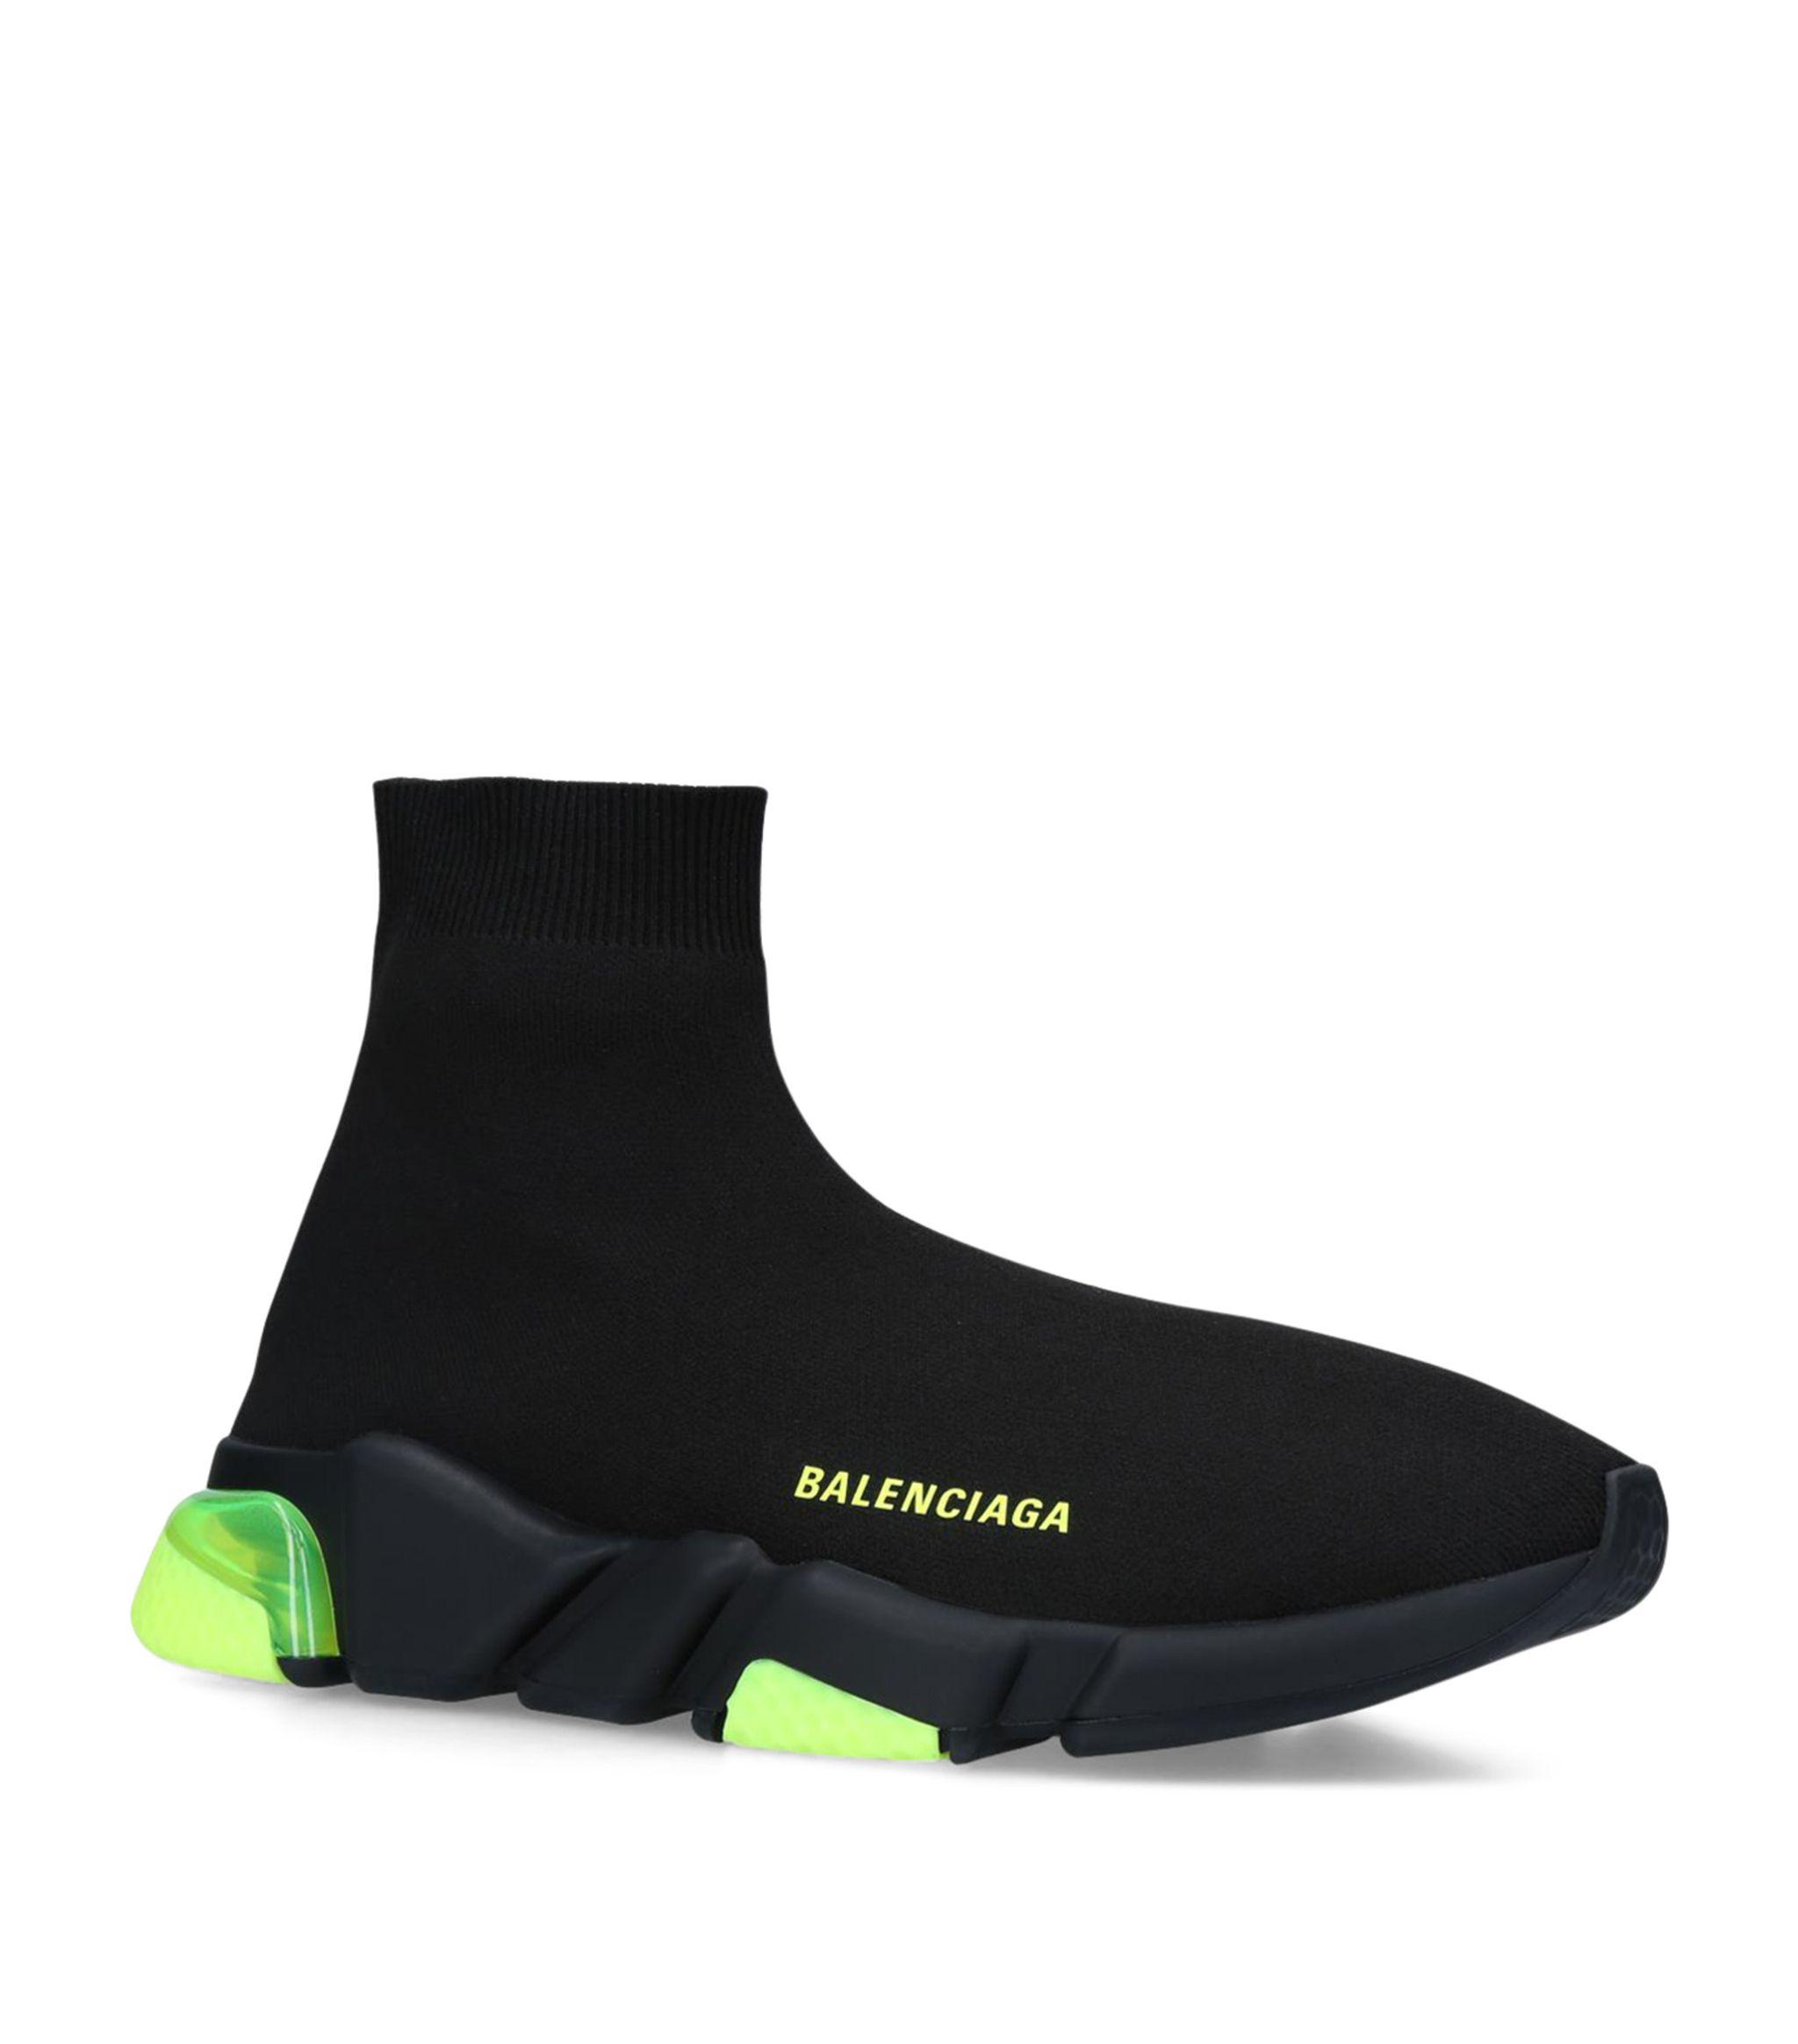 BCG Sock Sneakers Clear Sole  Black Yellow Fluo  fitsedubr